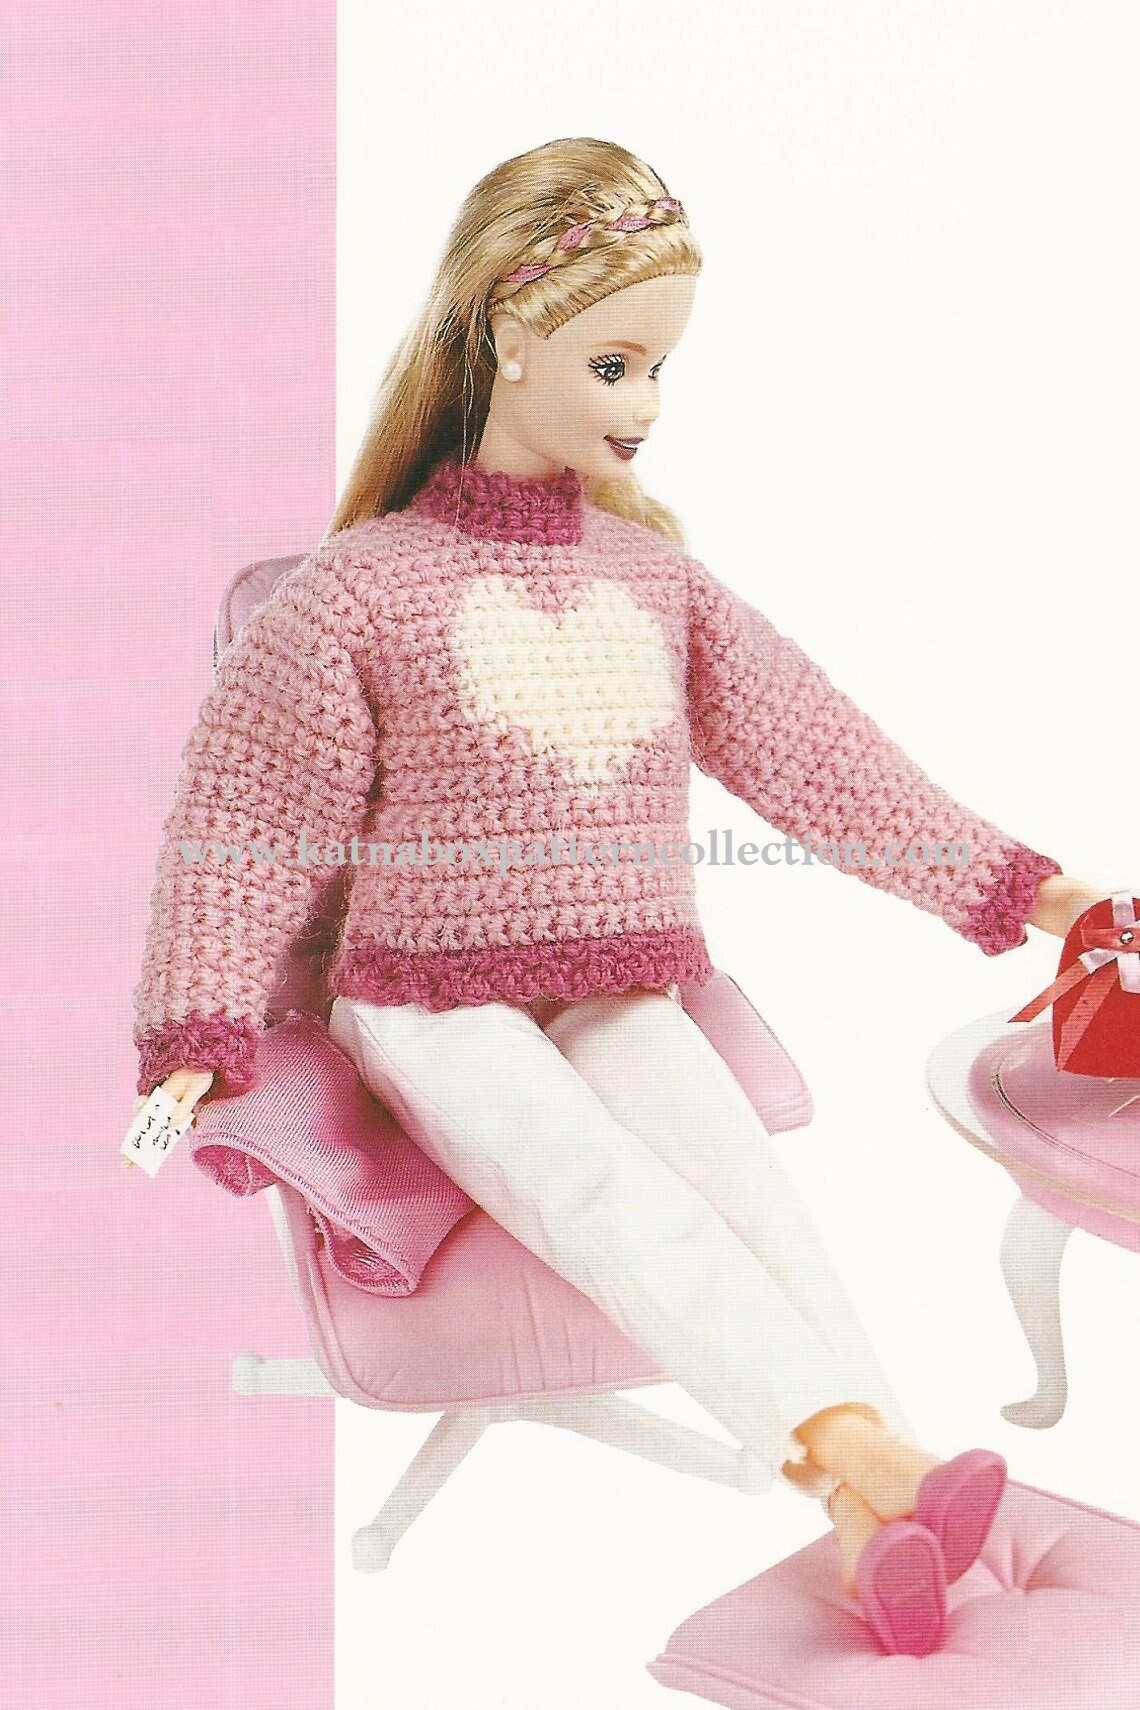 Crochet 18 Inch Doll Simple Panties, Fits American Girl Doll